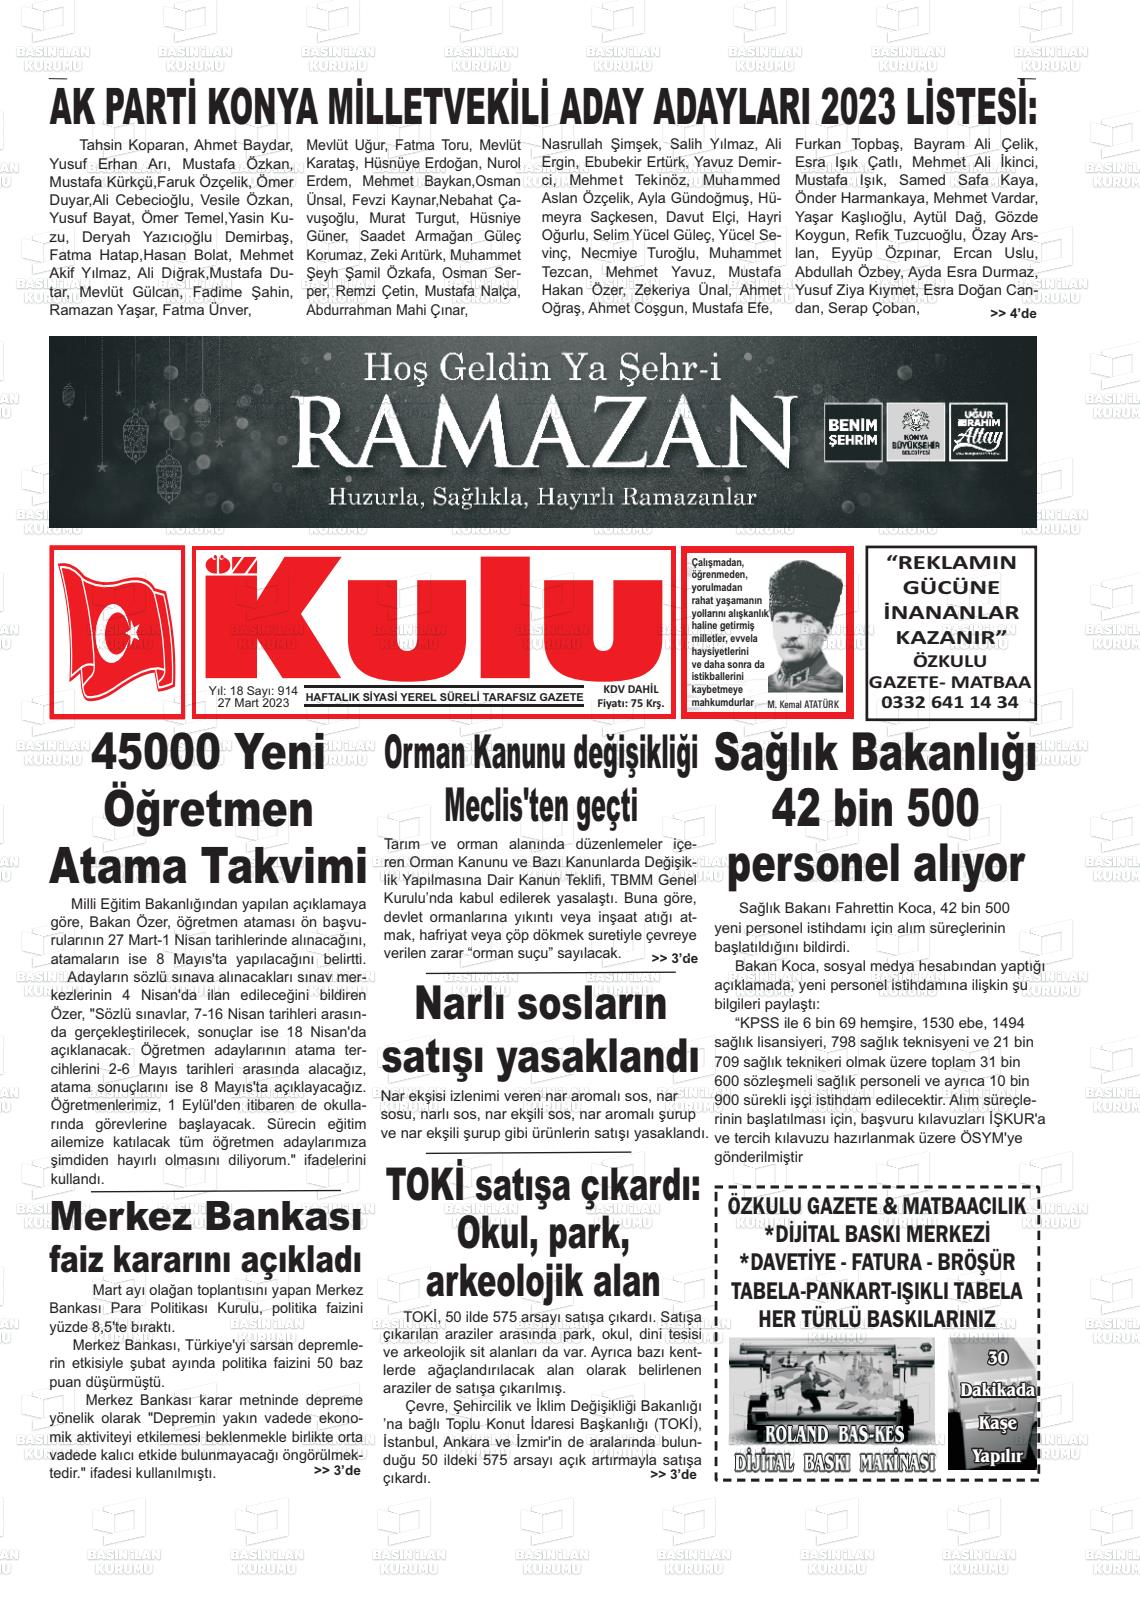 27 Mart 2023 Öz Kulu Gazete Manşeti